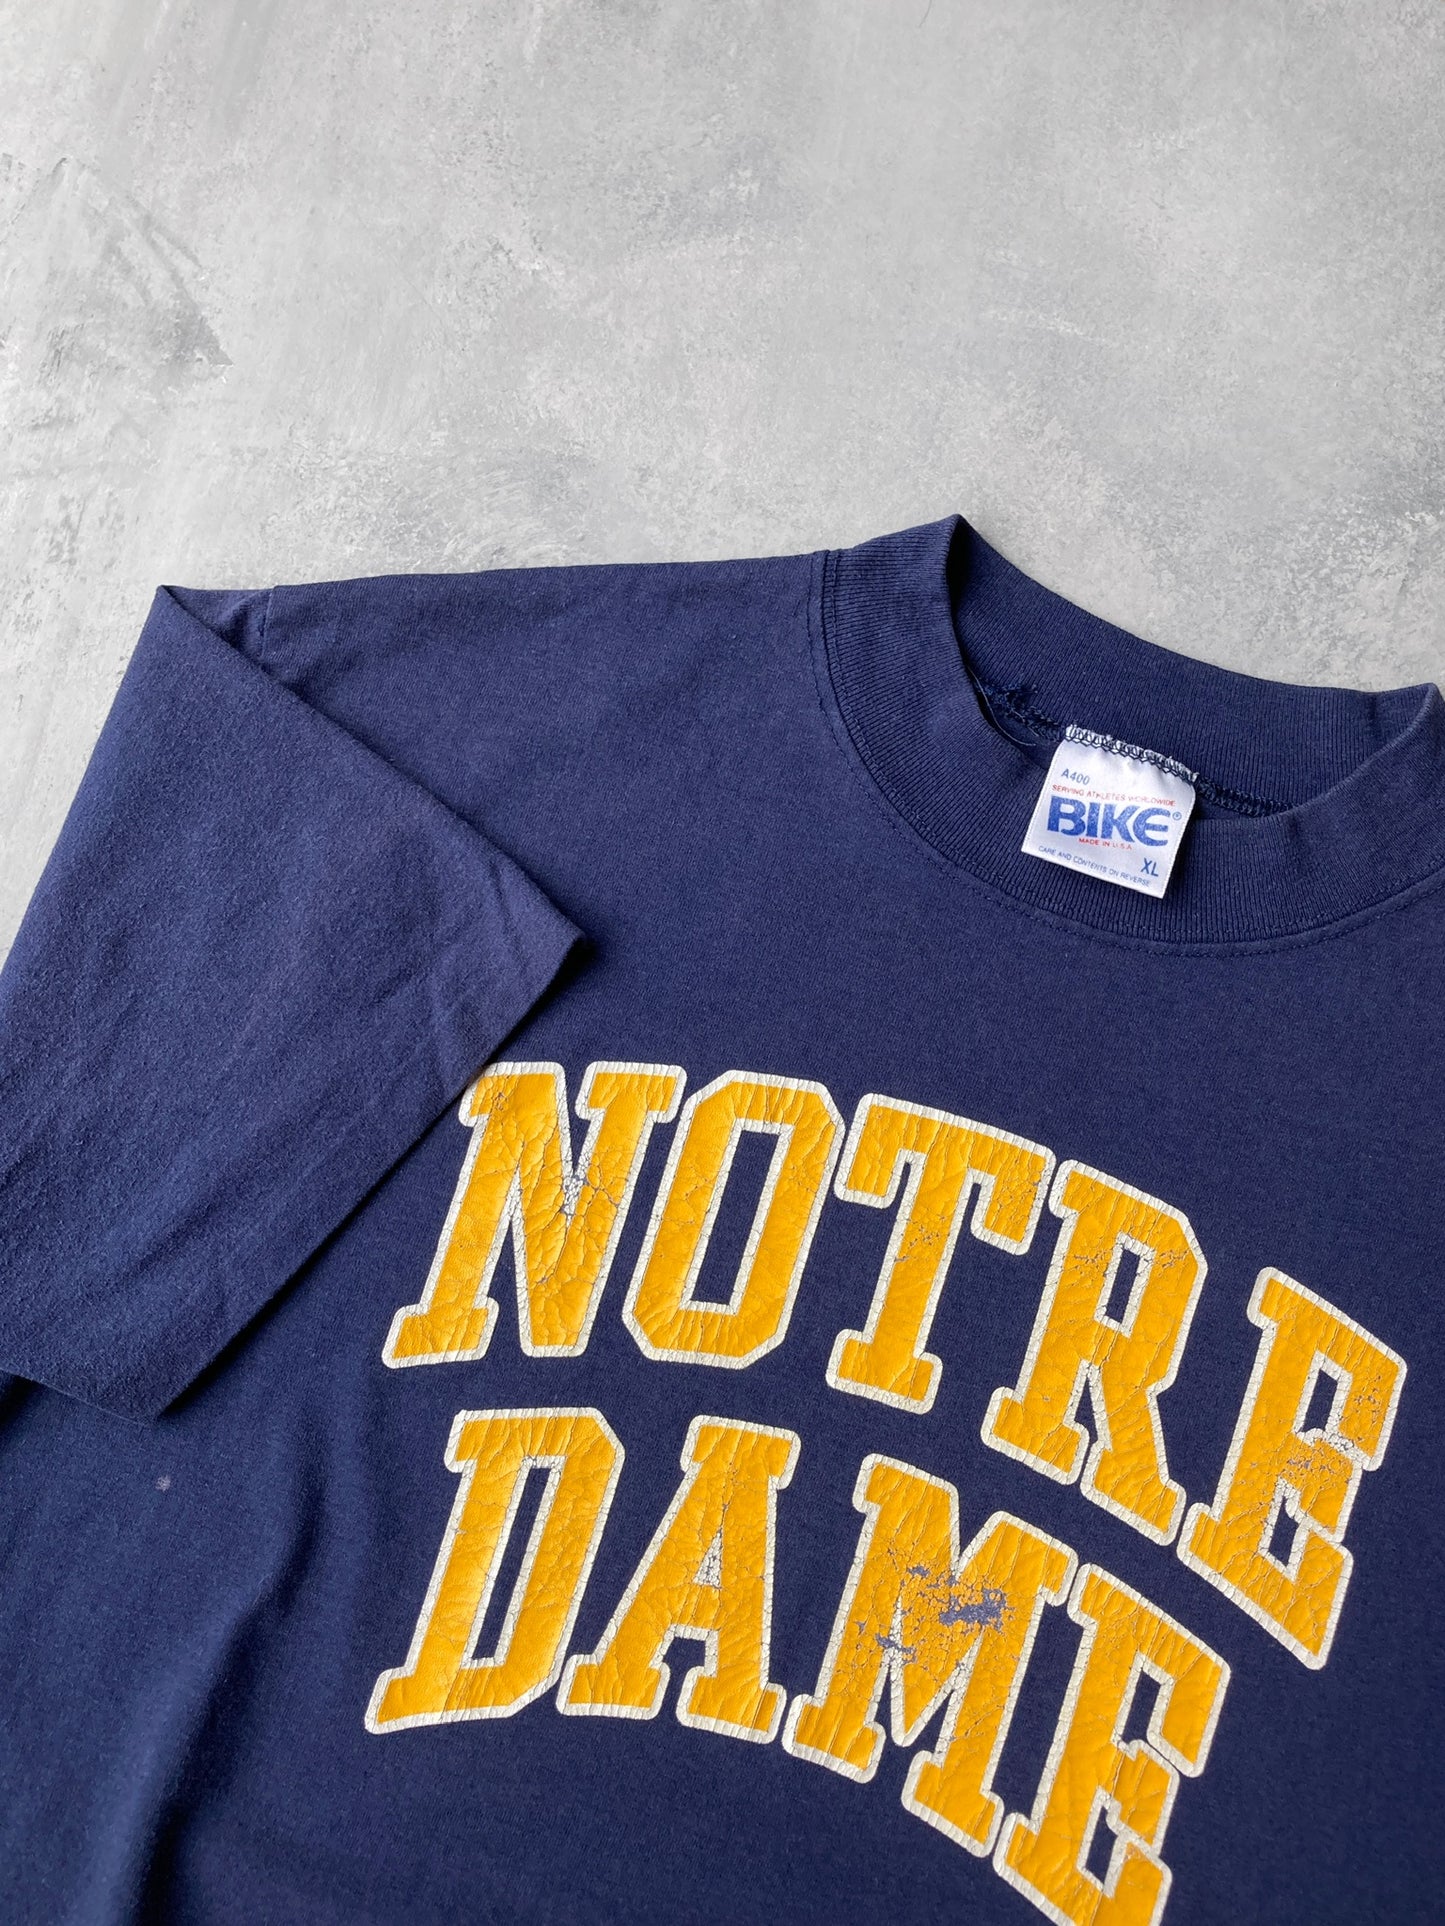 Notre Dame University T-Shirt 80's - Large